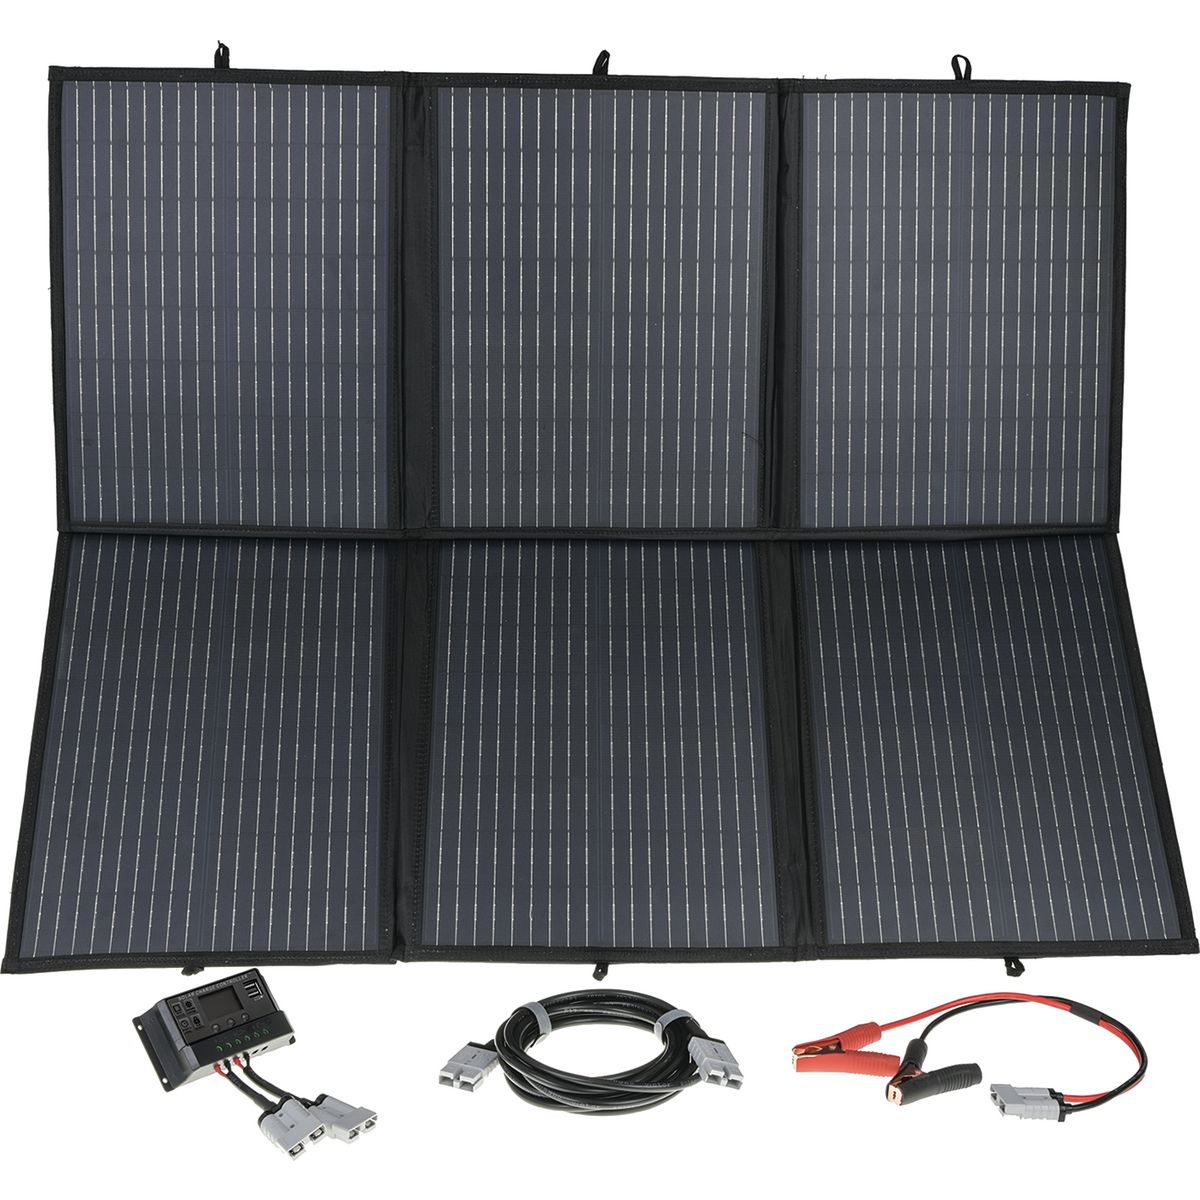 Drivetech 4x4 200W Foldable Solar Blanket